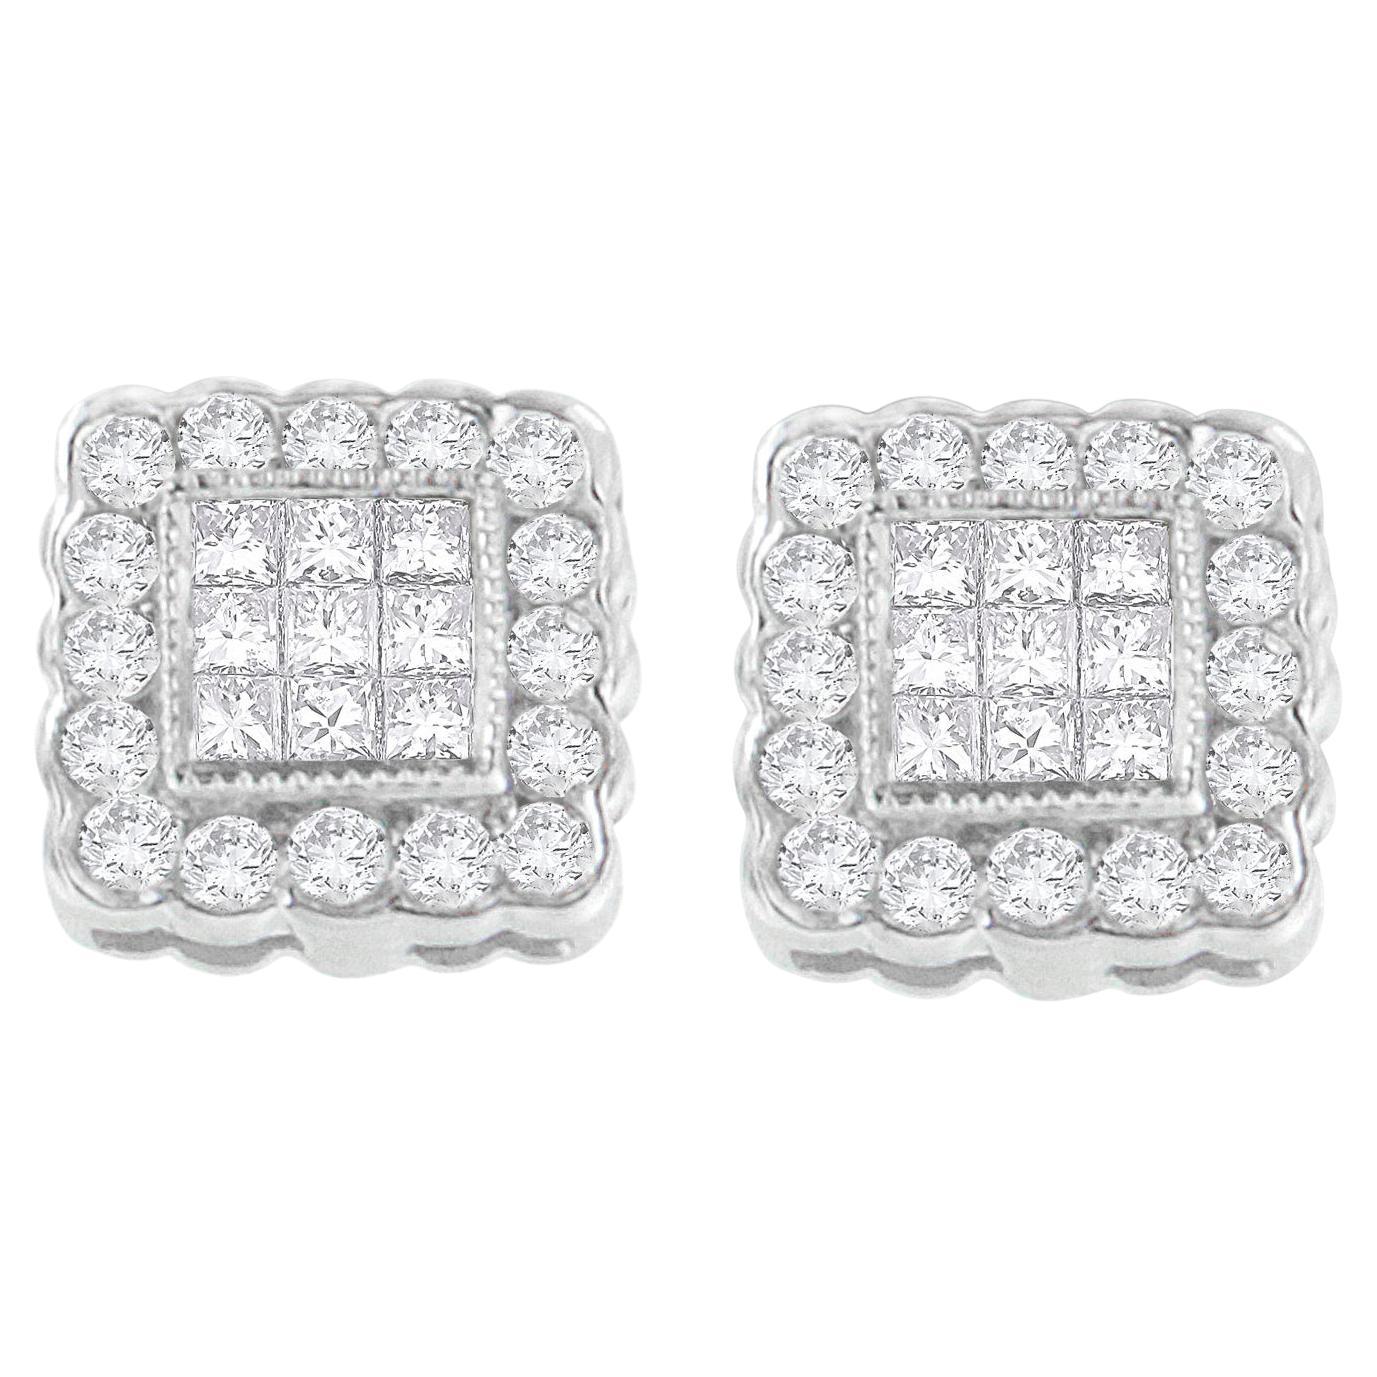 14K White Gold 1.0 Carat Round-Cut and Princess-Cut Diamond Stud Earring